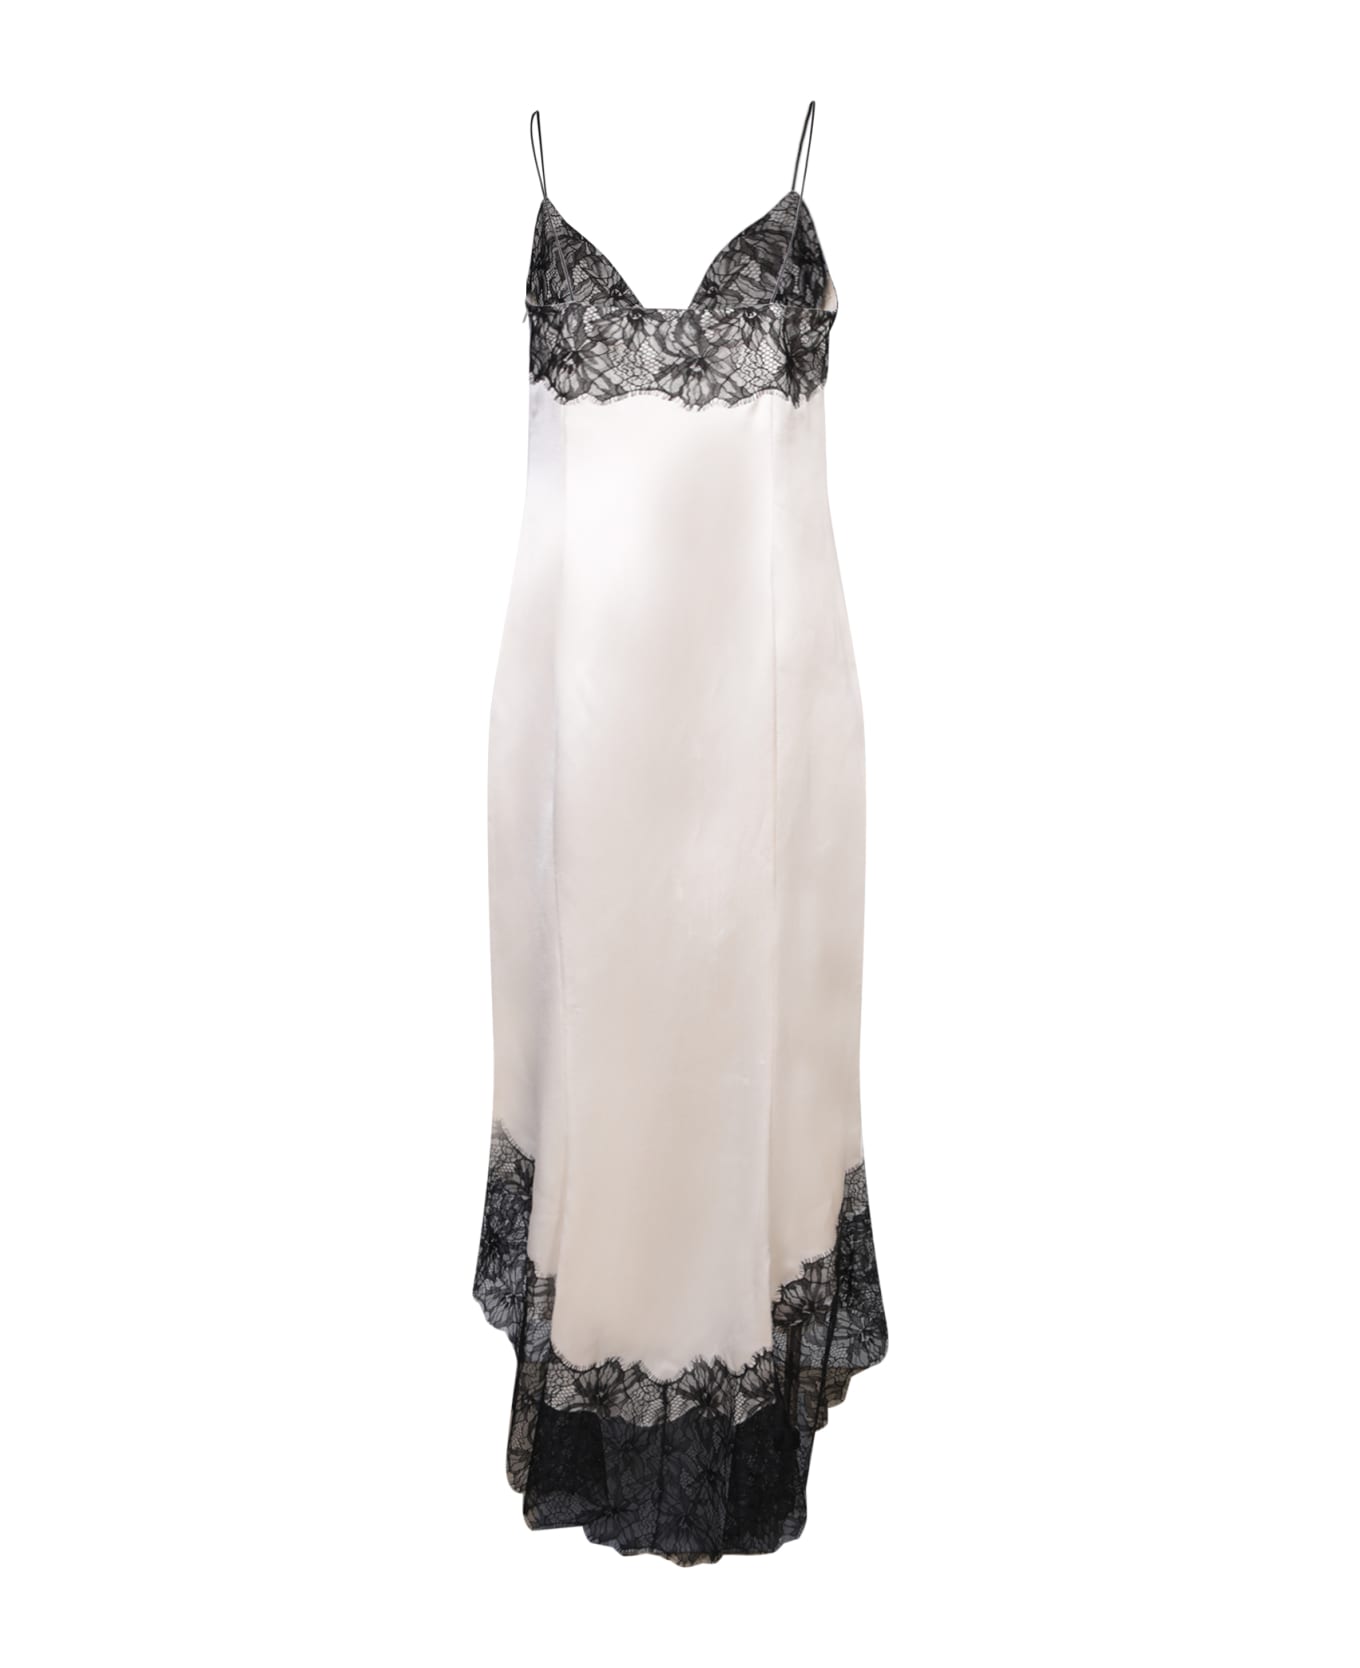 Balmain Black And White Lace Detail Long Lingerie Dress - Beige